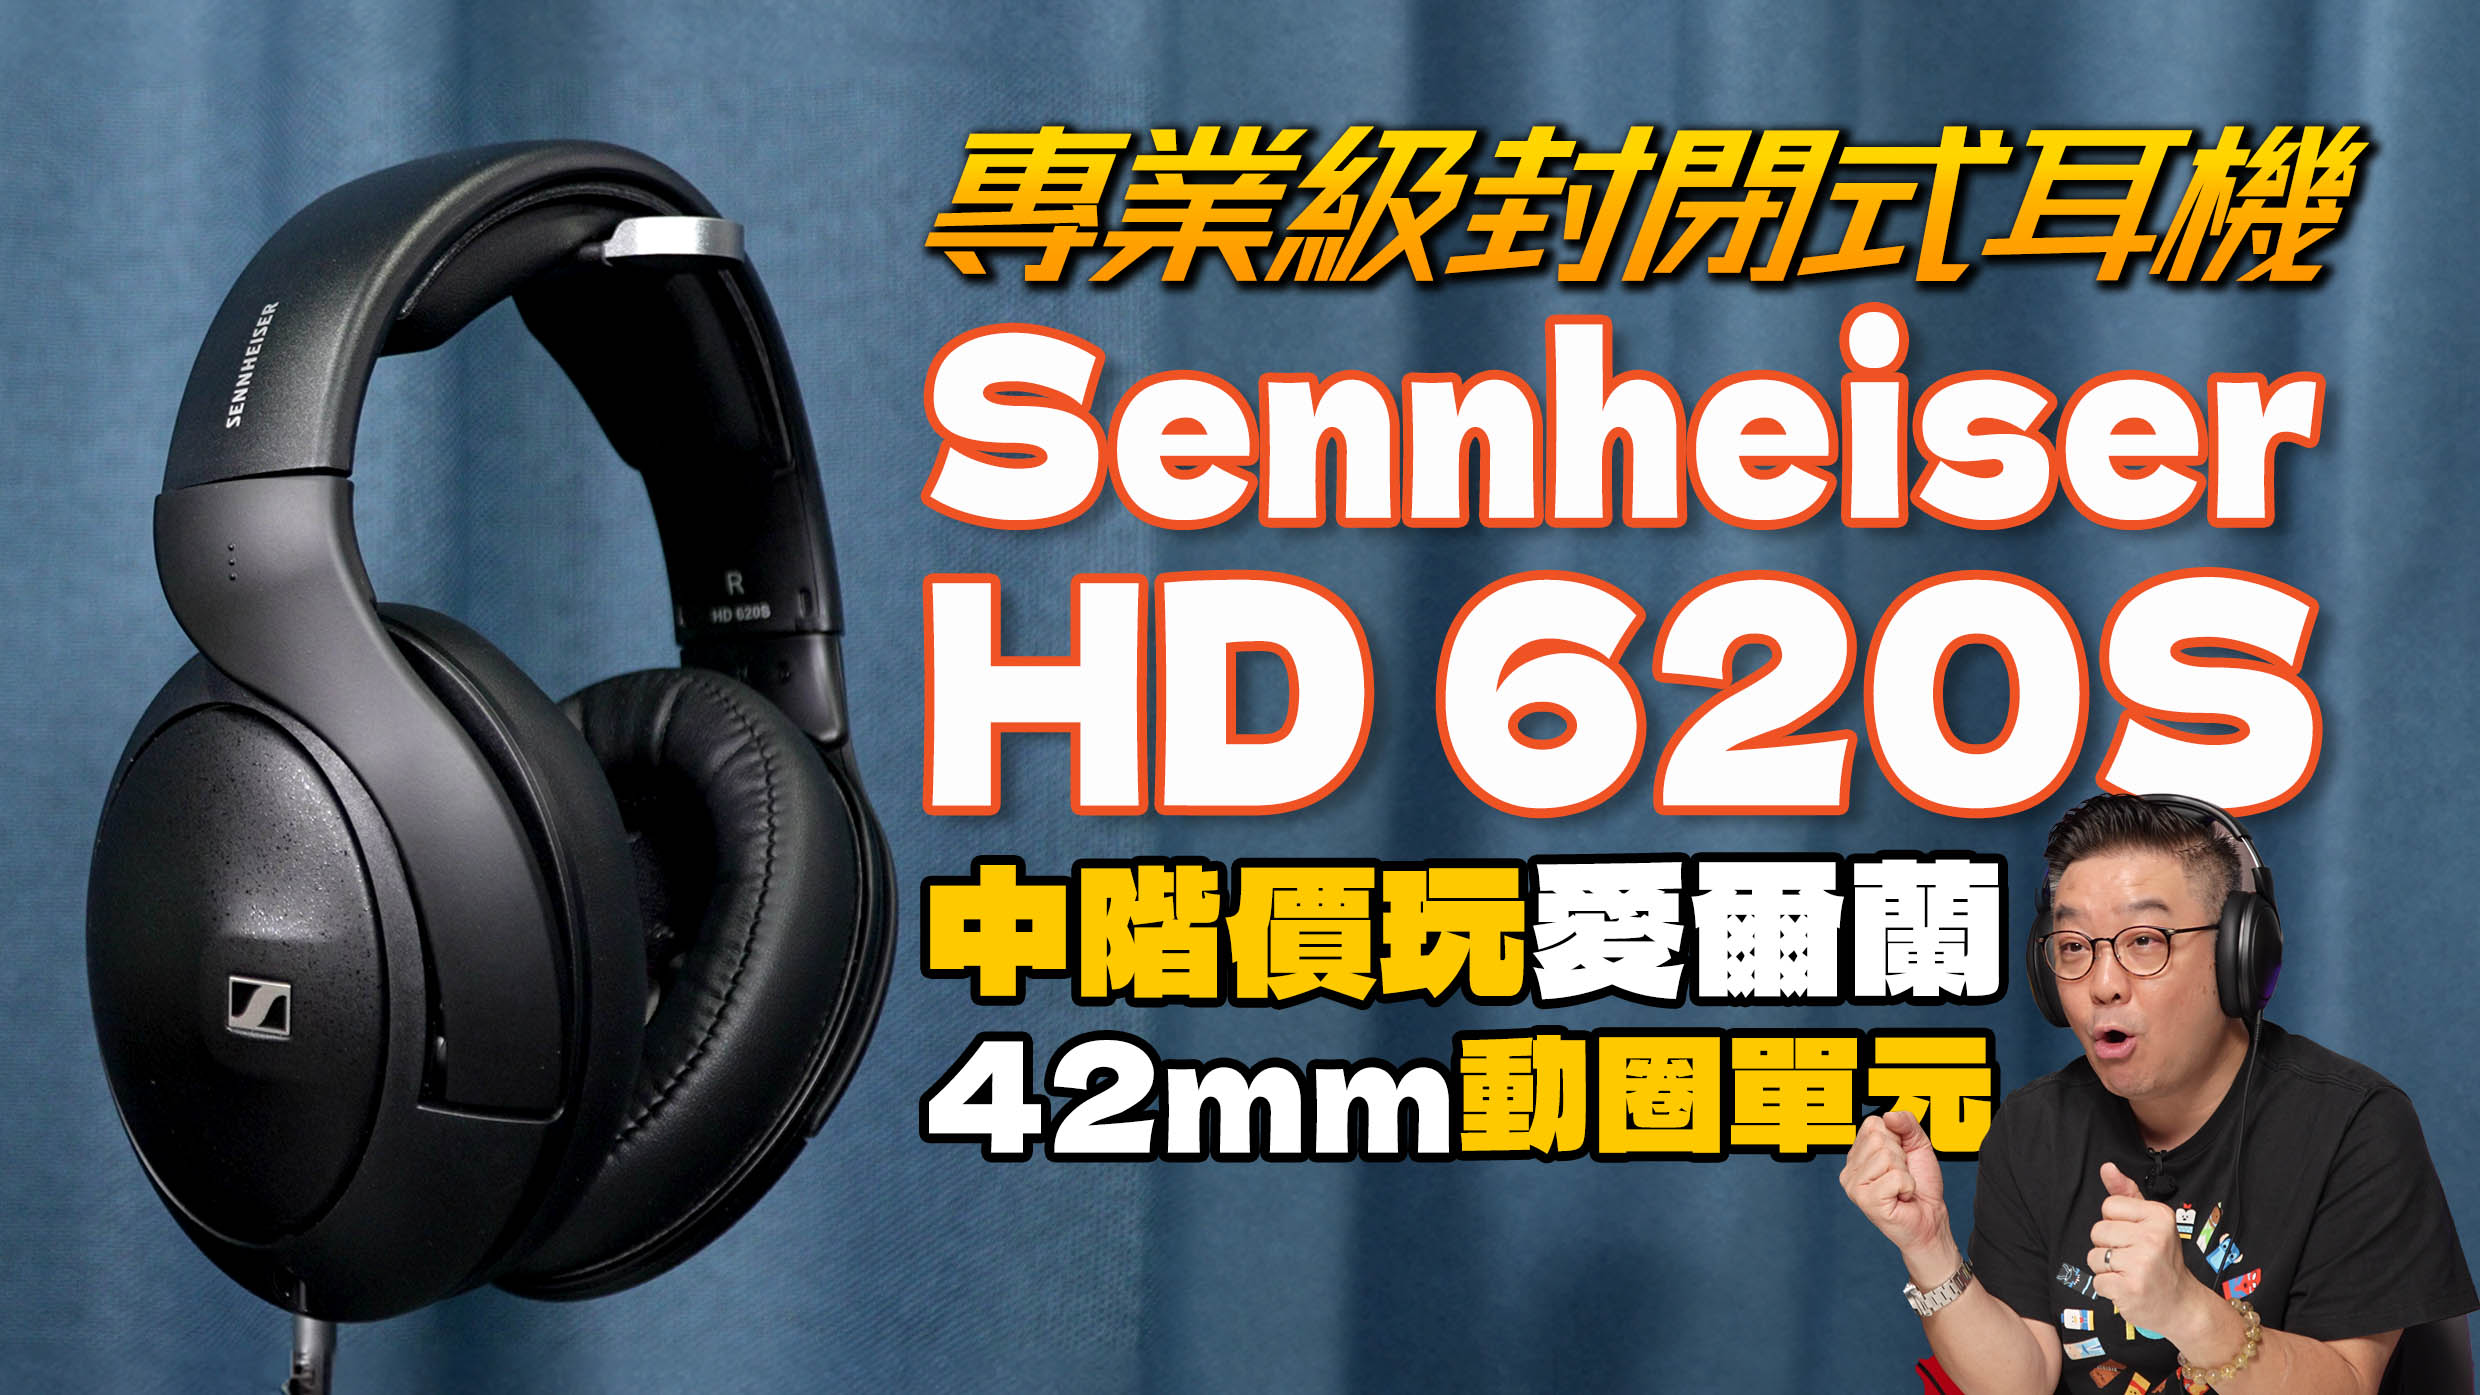 Sennheiser HD 620s review Forum copy.jpg